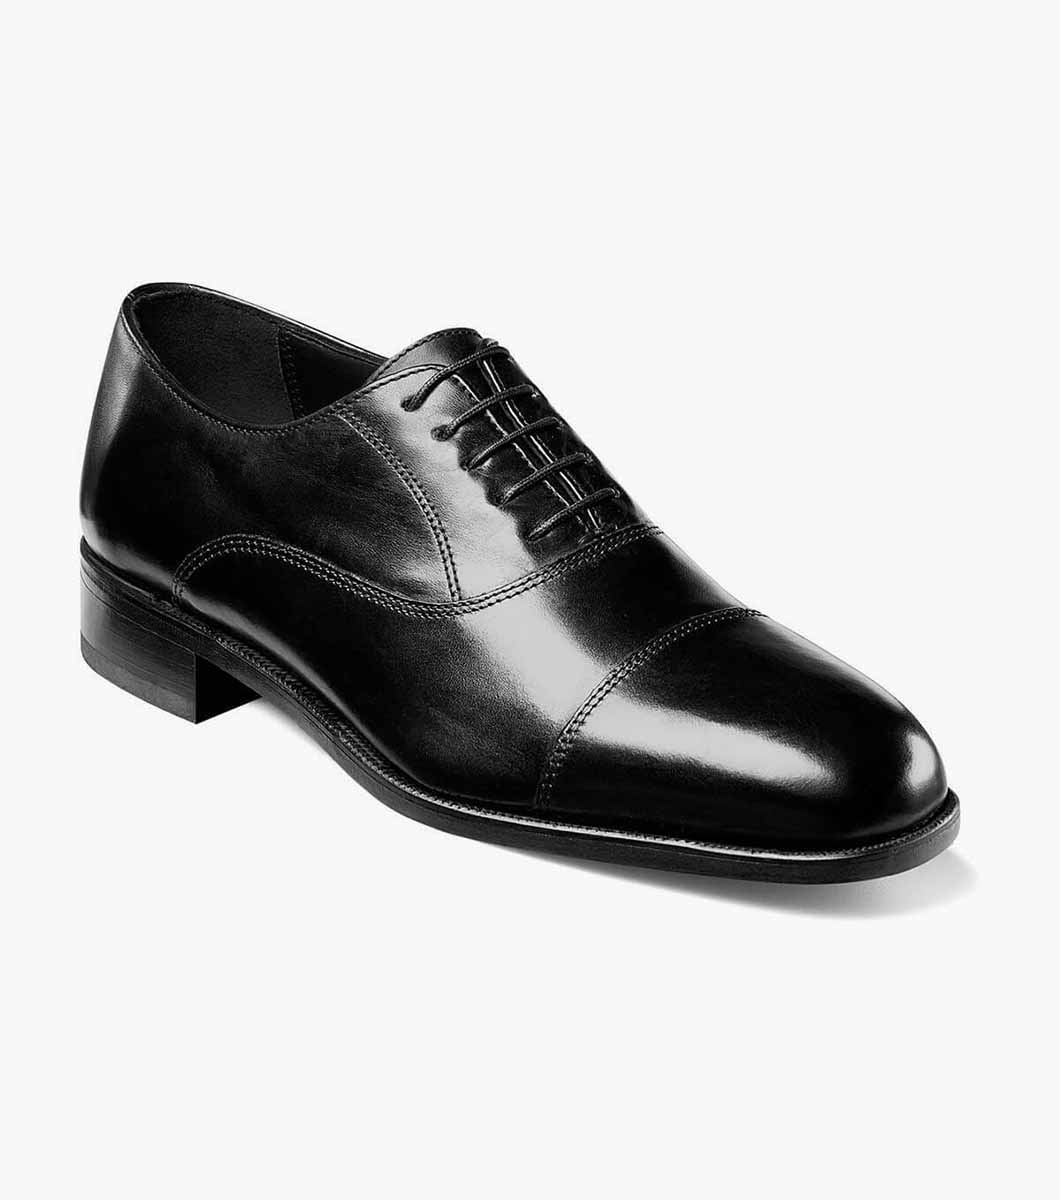 florsheim leather shoes